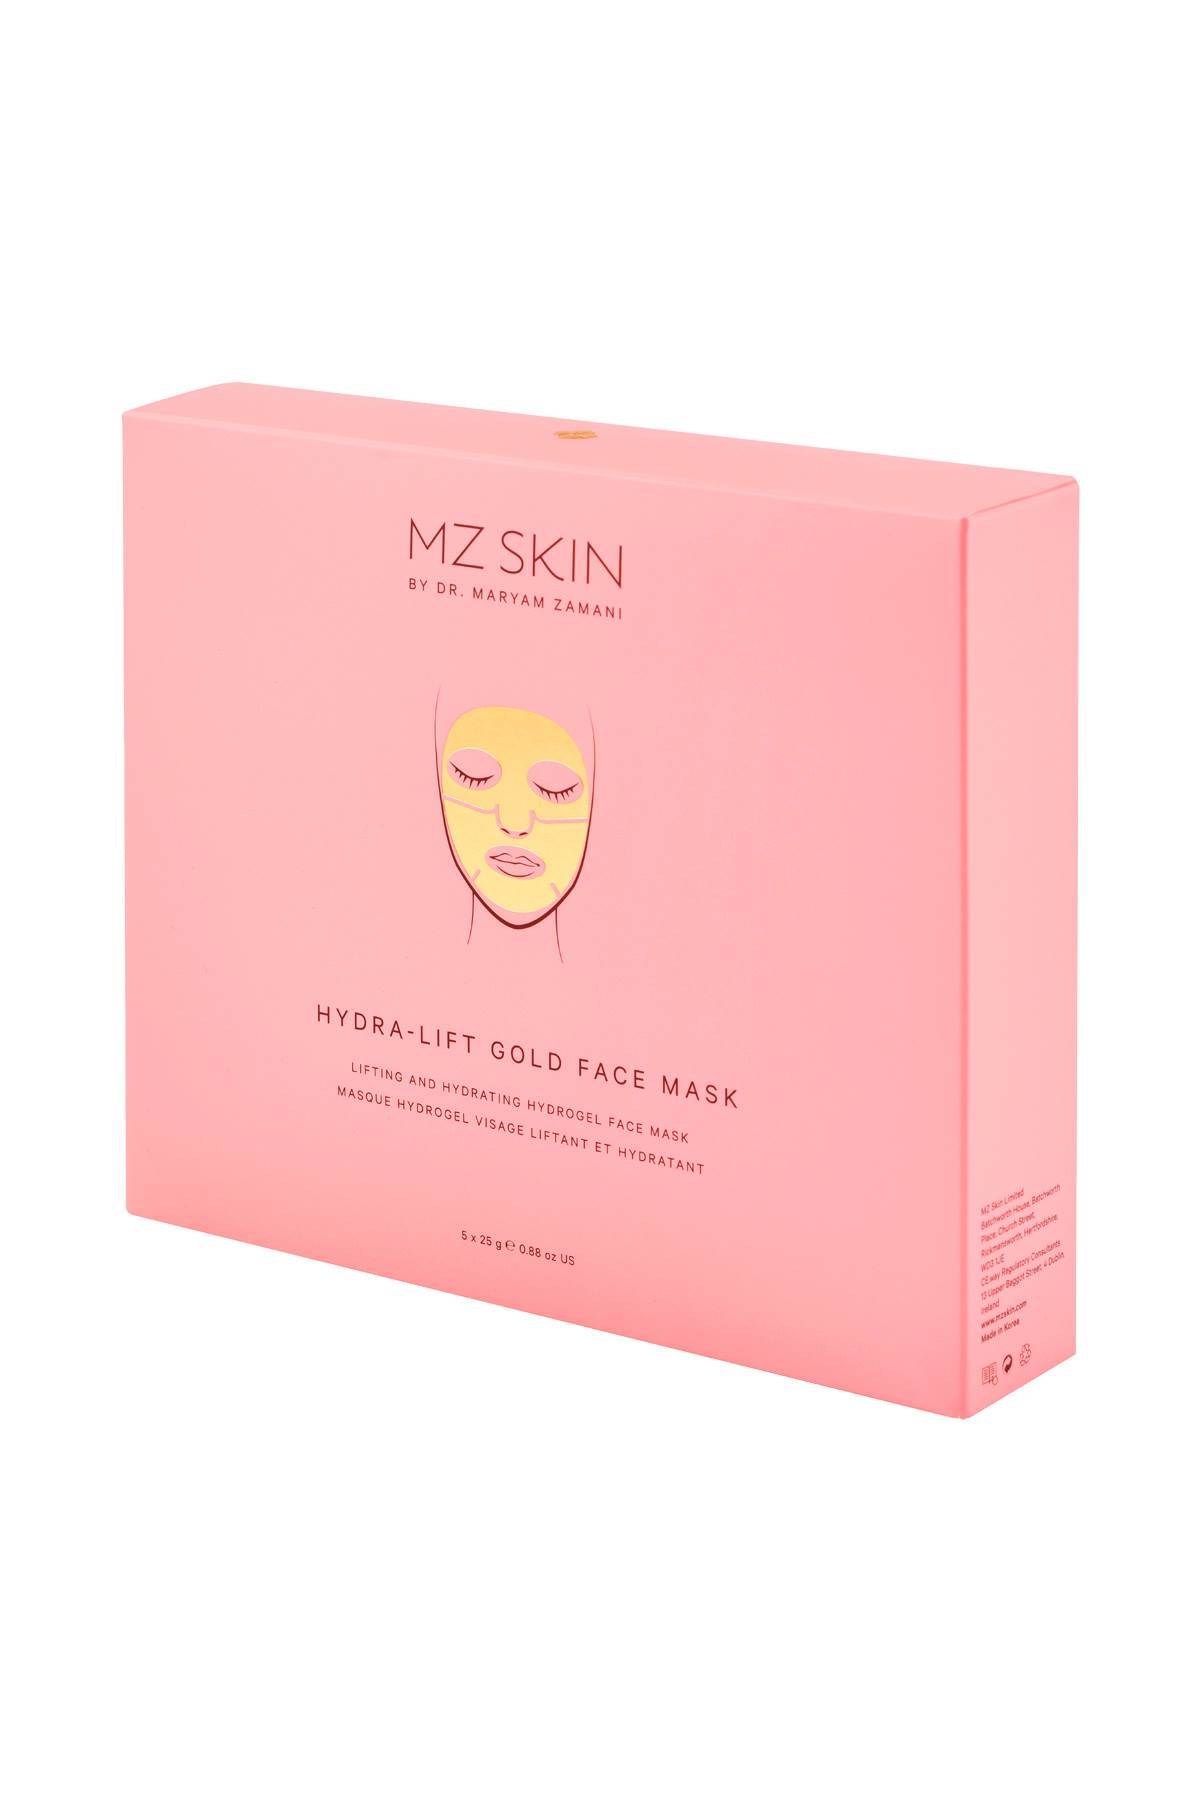 Mz Skin MZ SKIN hydra-lift gold face mask